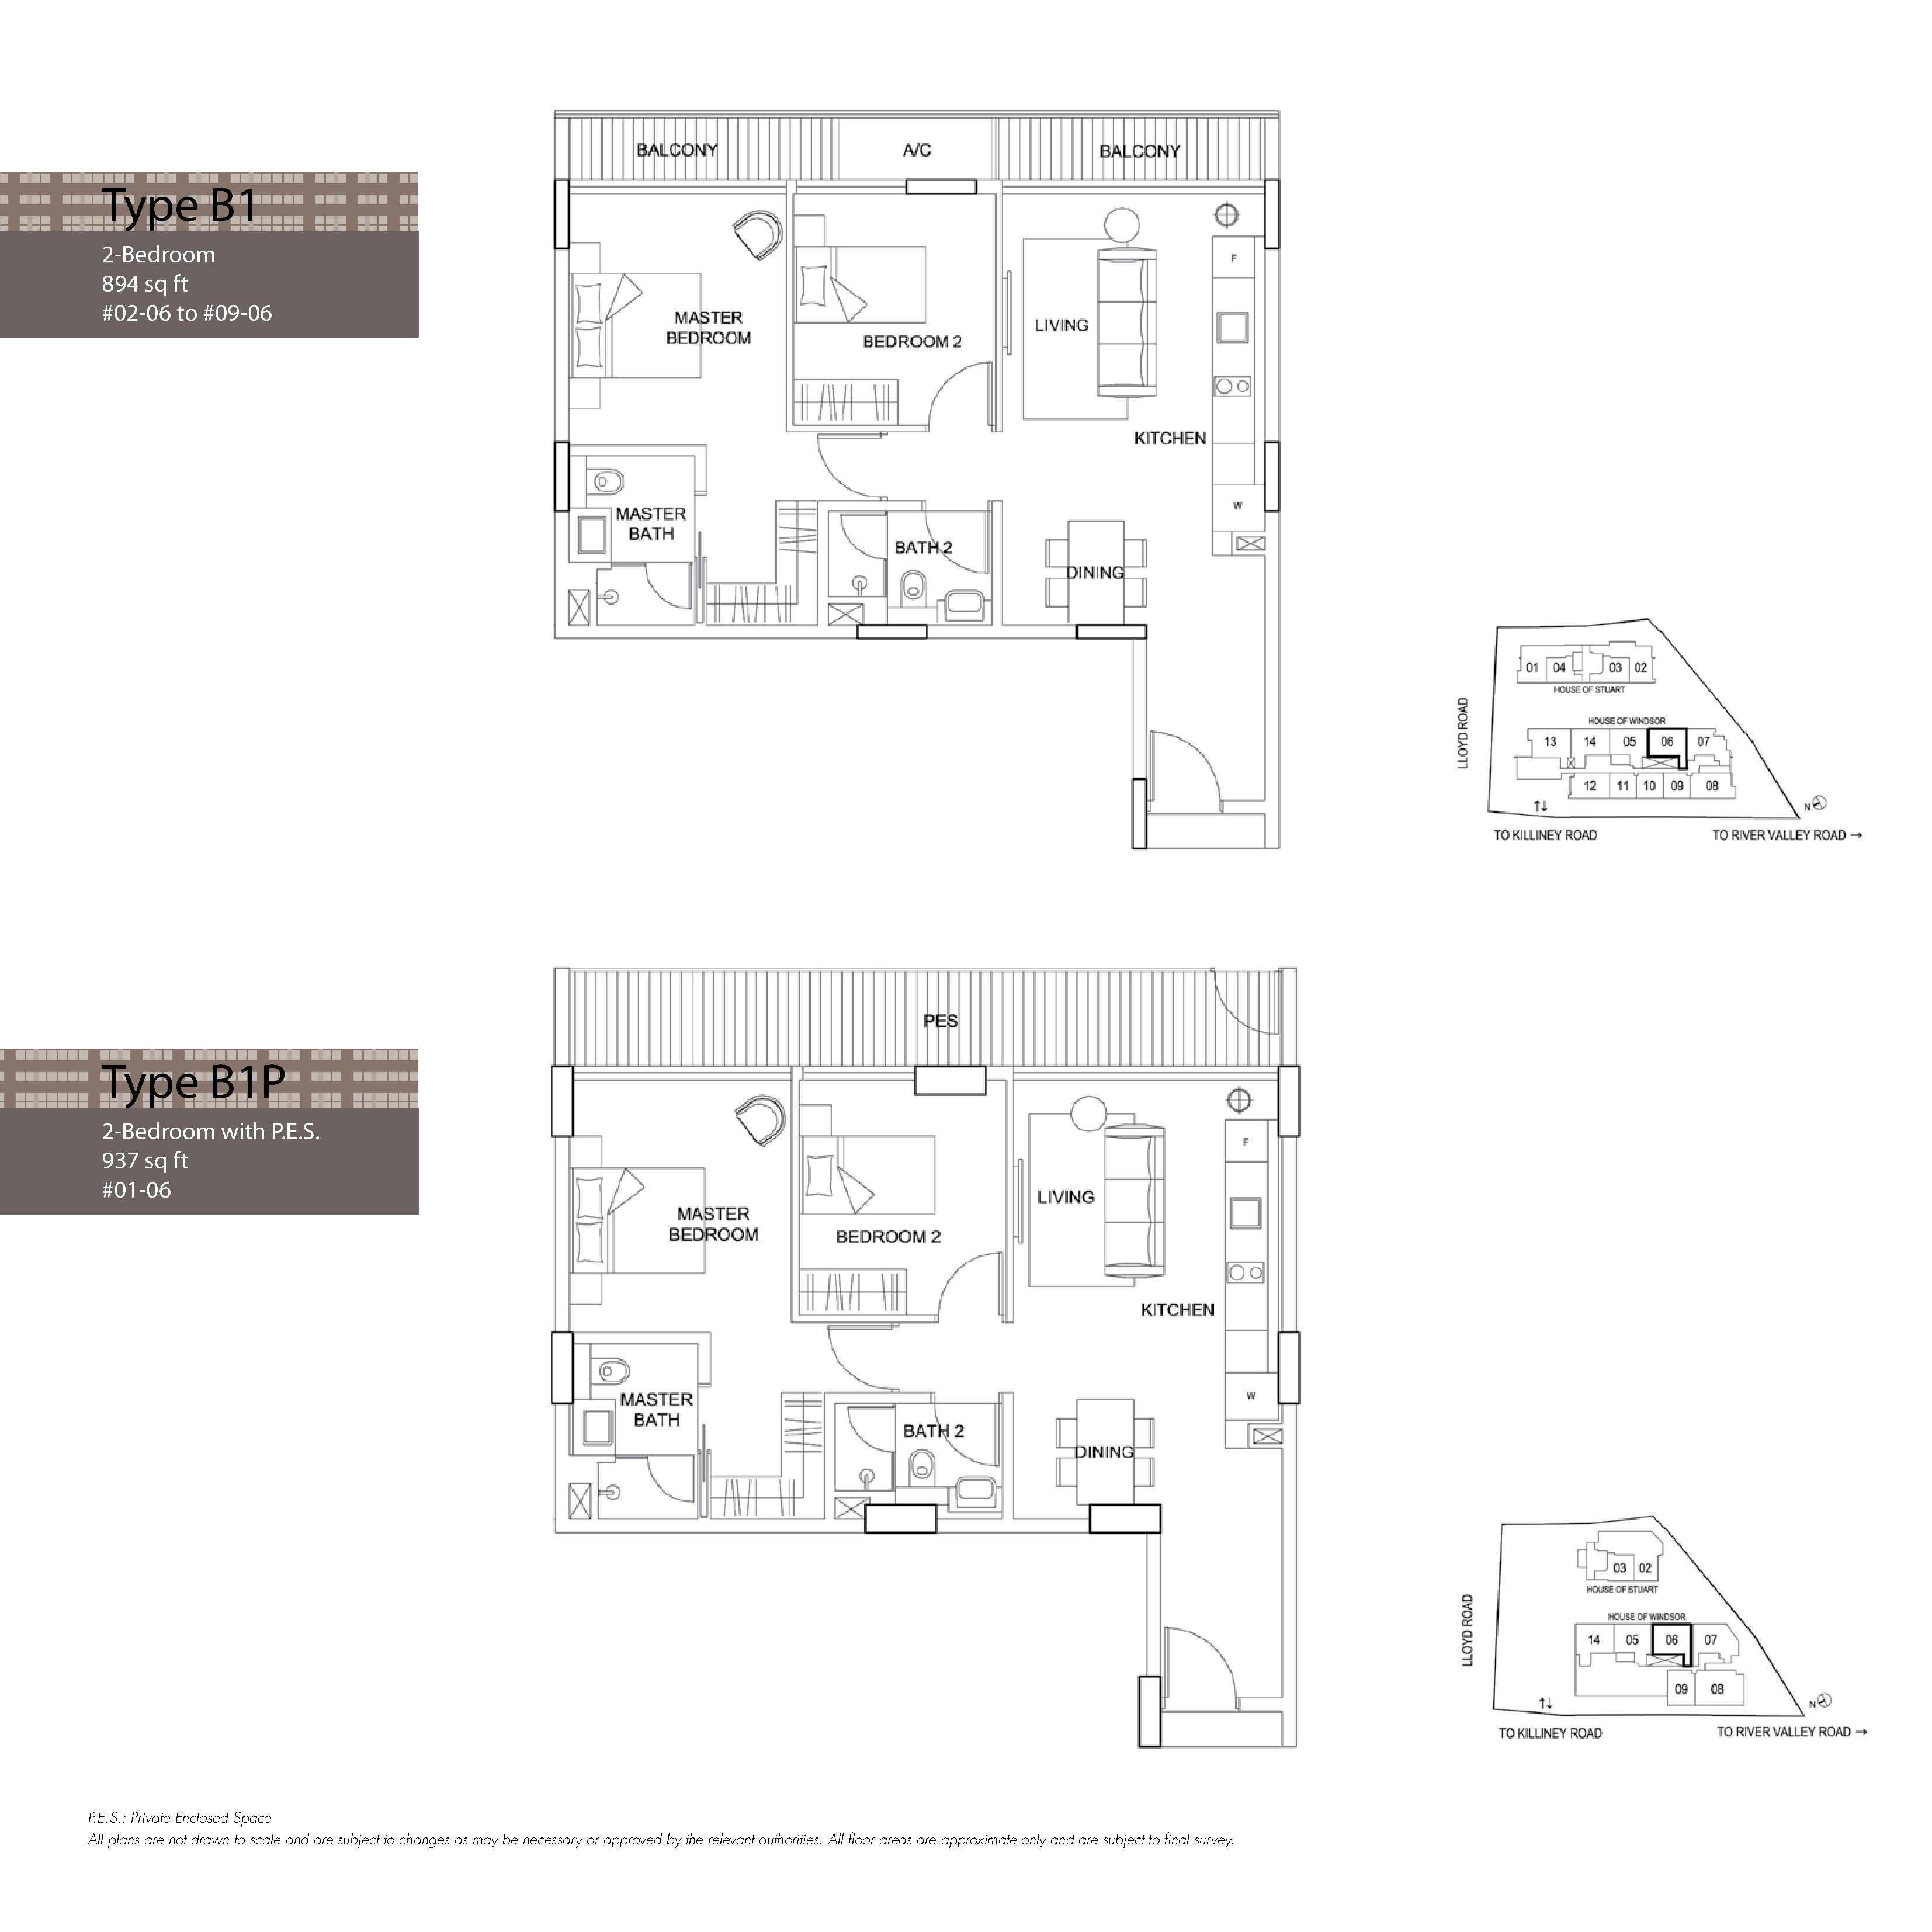 The Boutiq @ Killiney 2 Bedroom/2 Bedroom PES Floor Plans Type B1, B1P